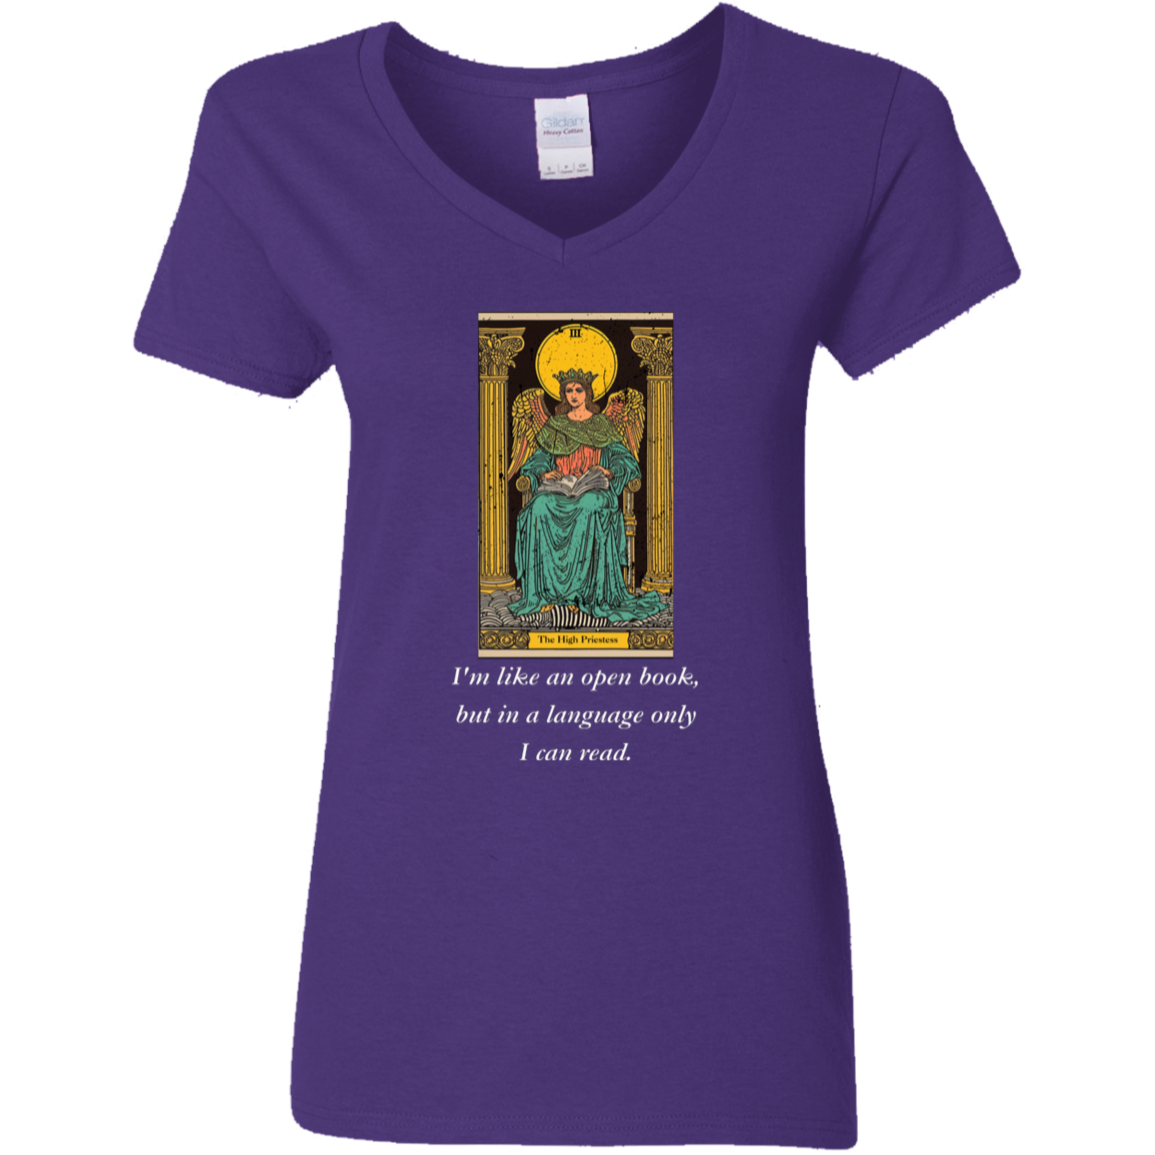 Funny the high priestess women's purple tarot card T shirt from BLK Moon Shop